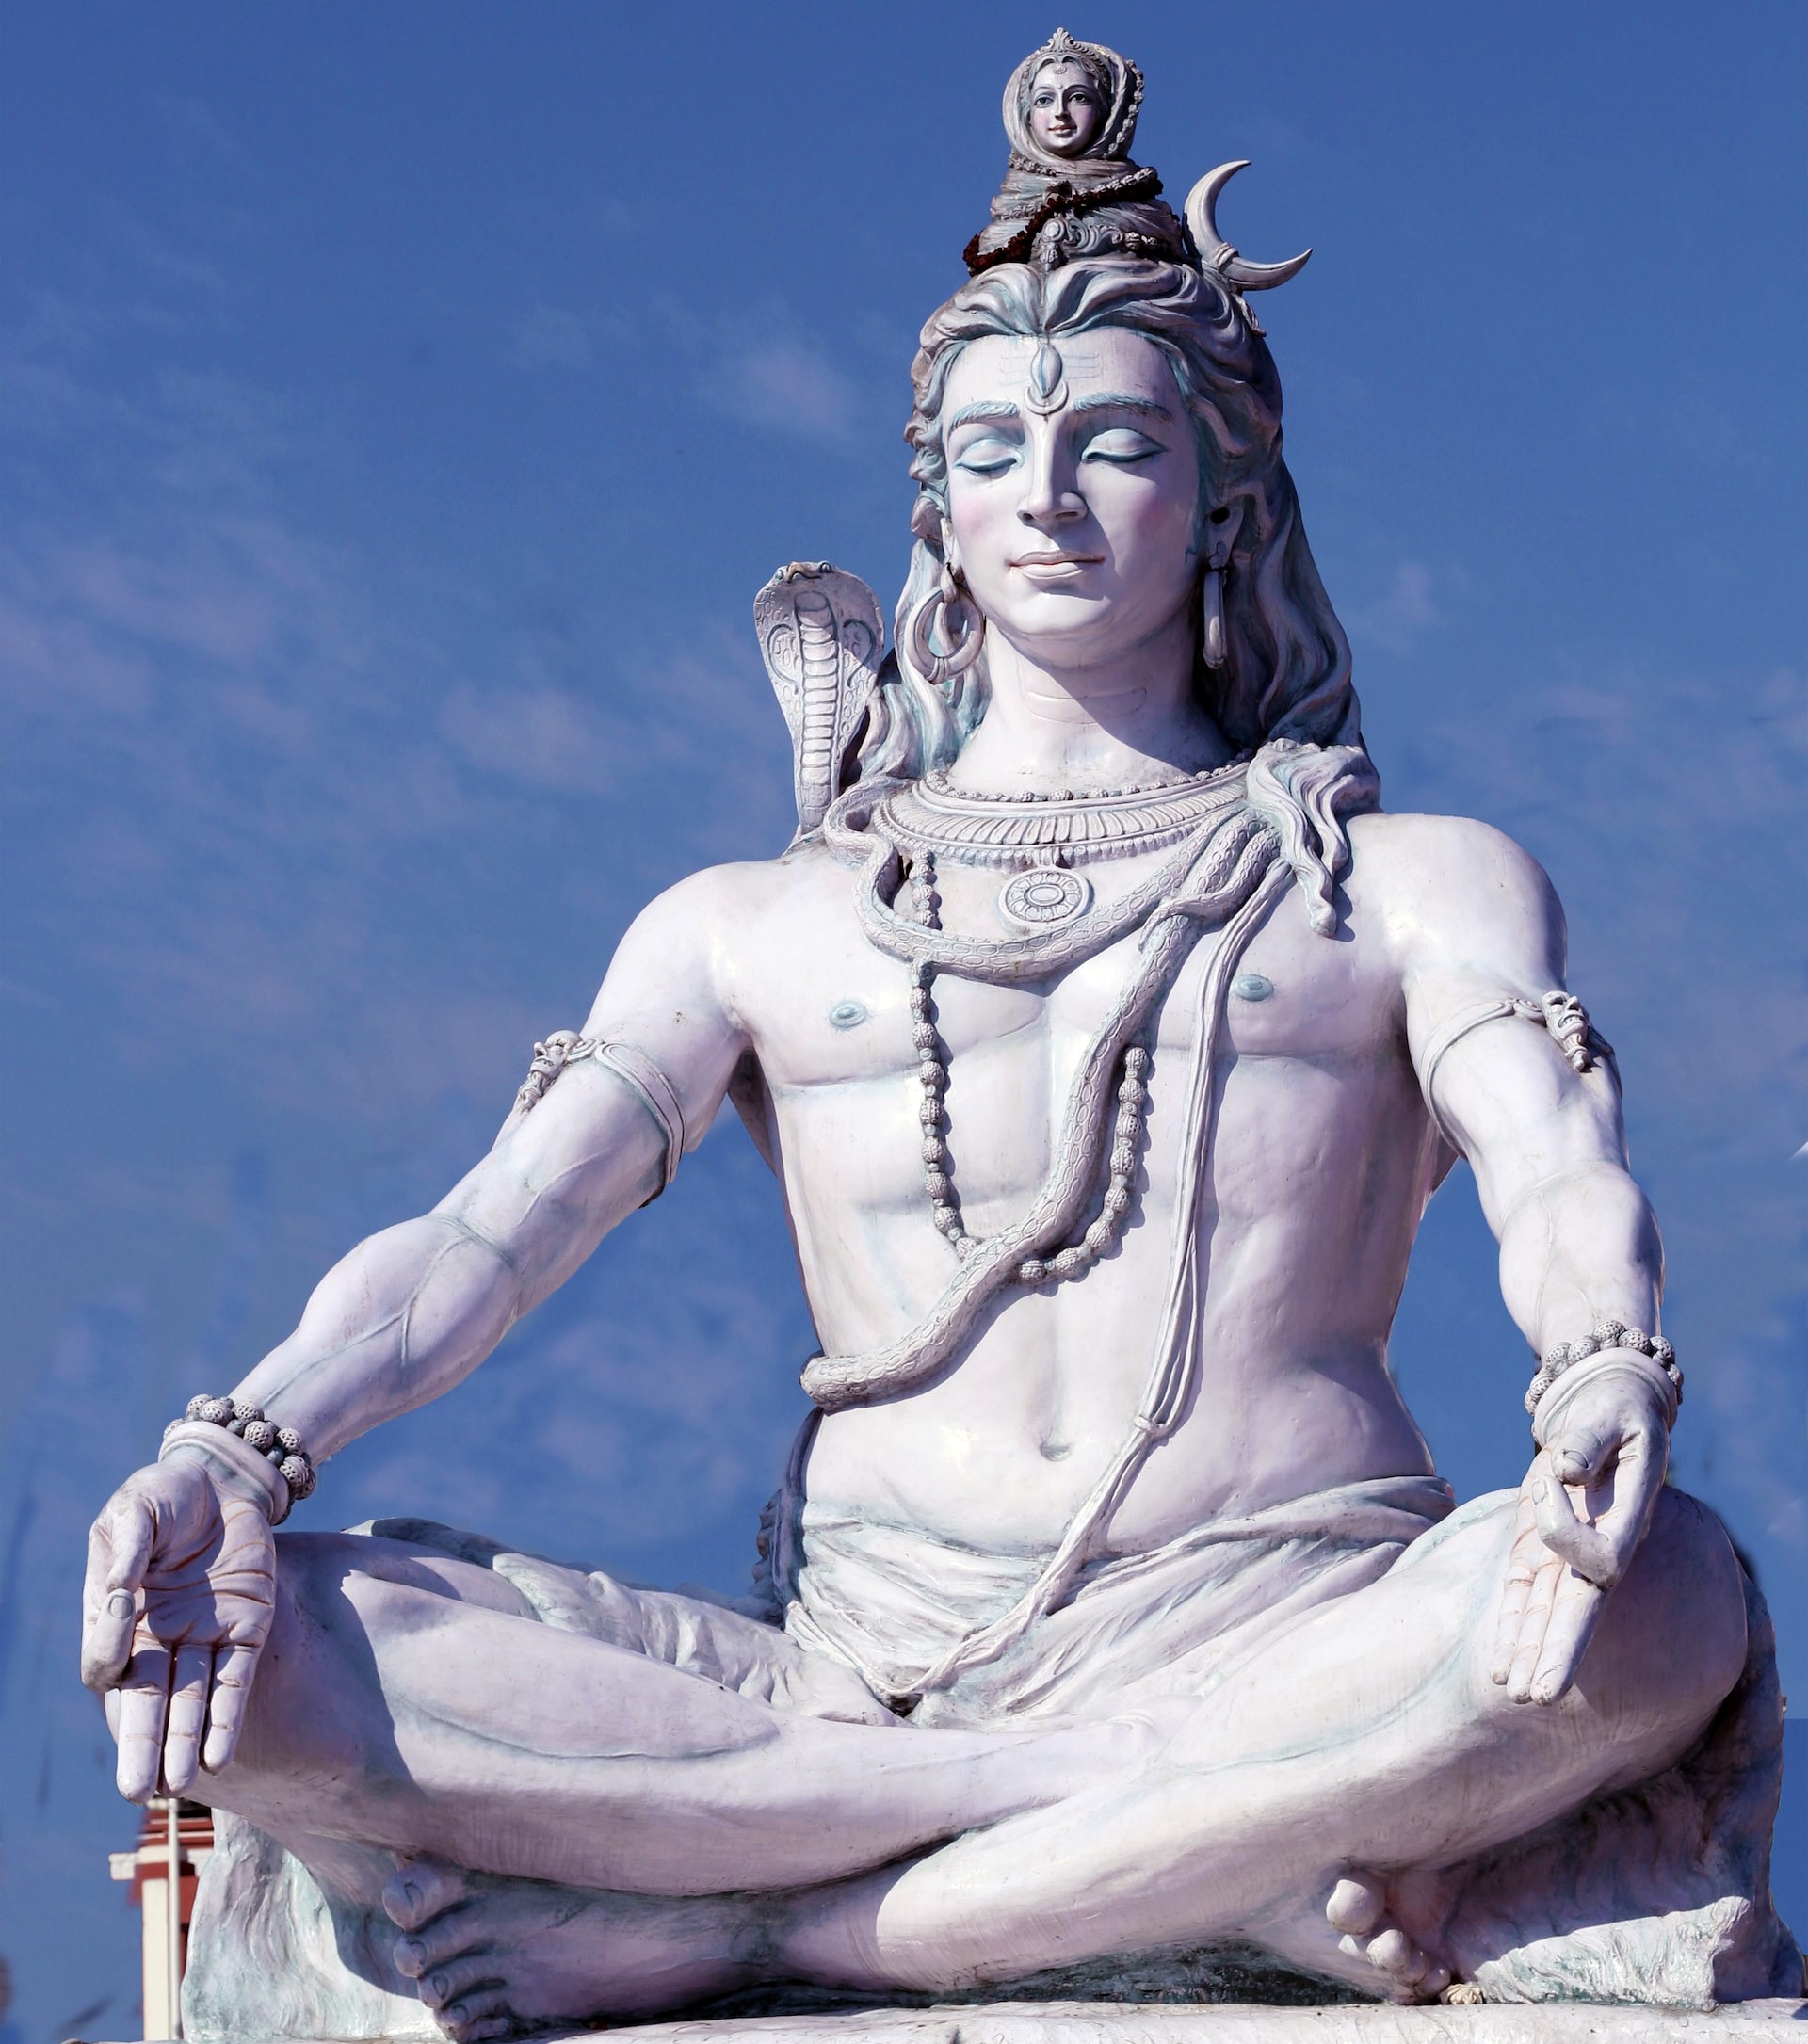 5 Things To Know About Maha Shivaratri